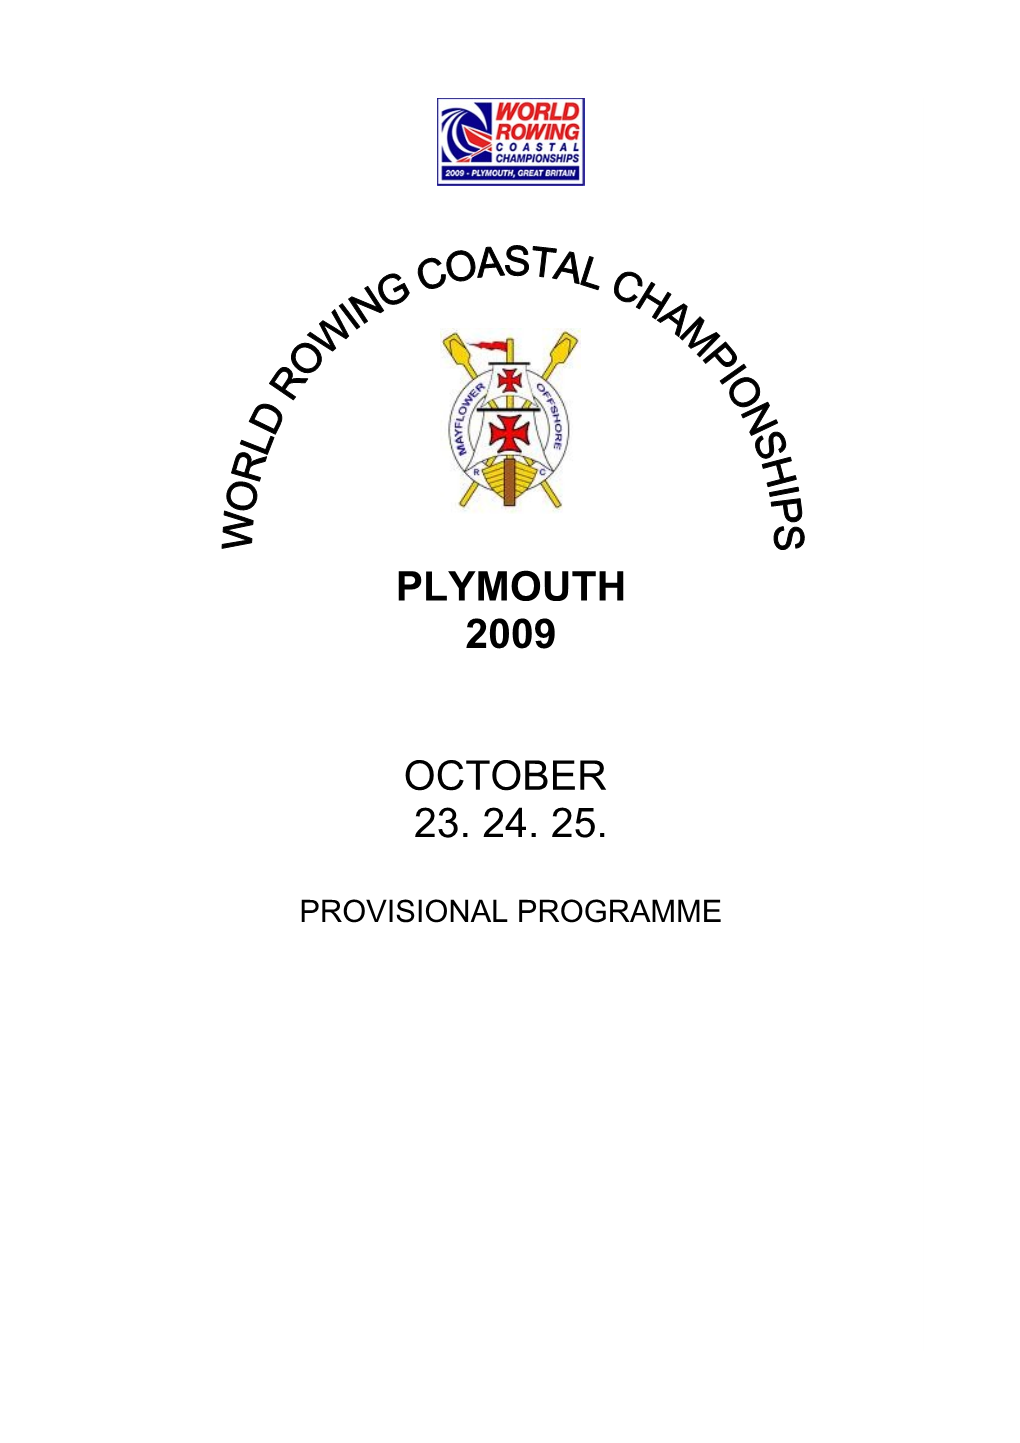 World Coastal Rowing Championships Plymouth